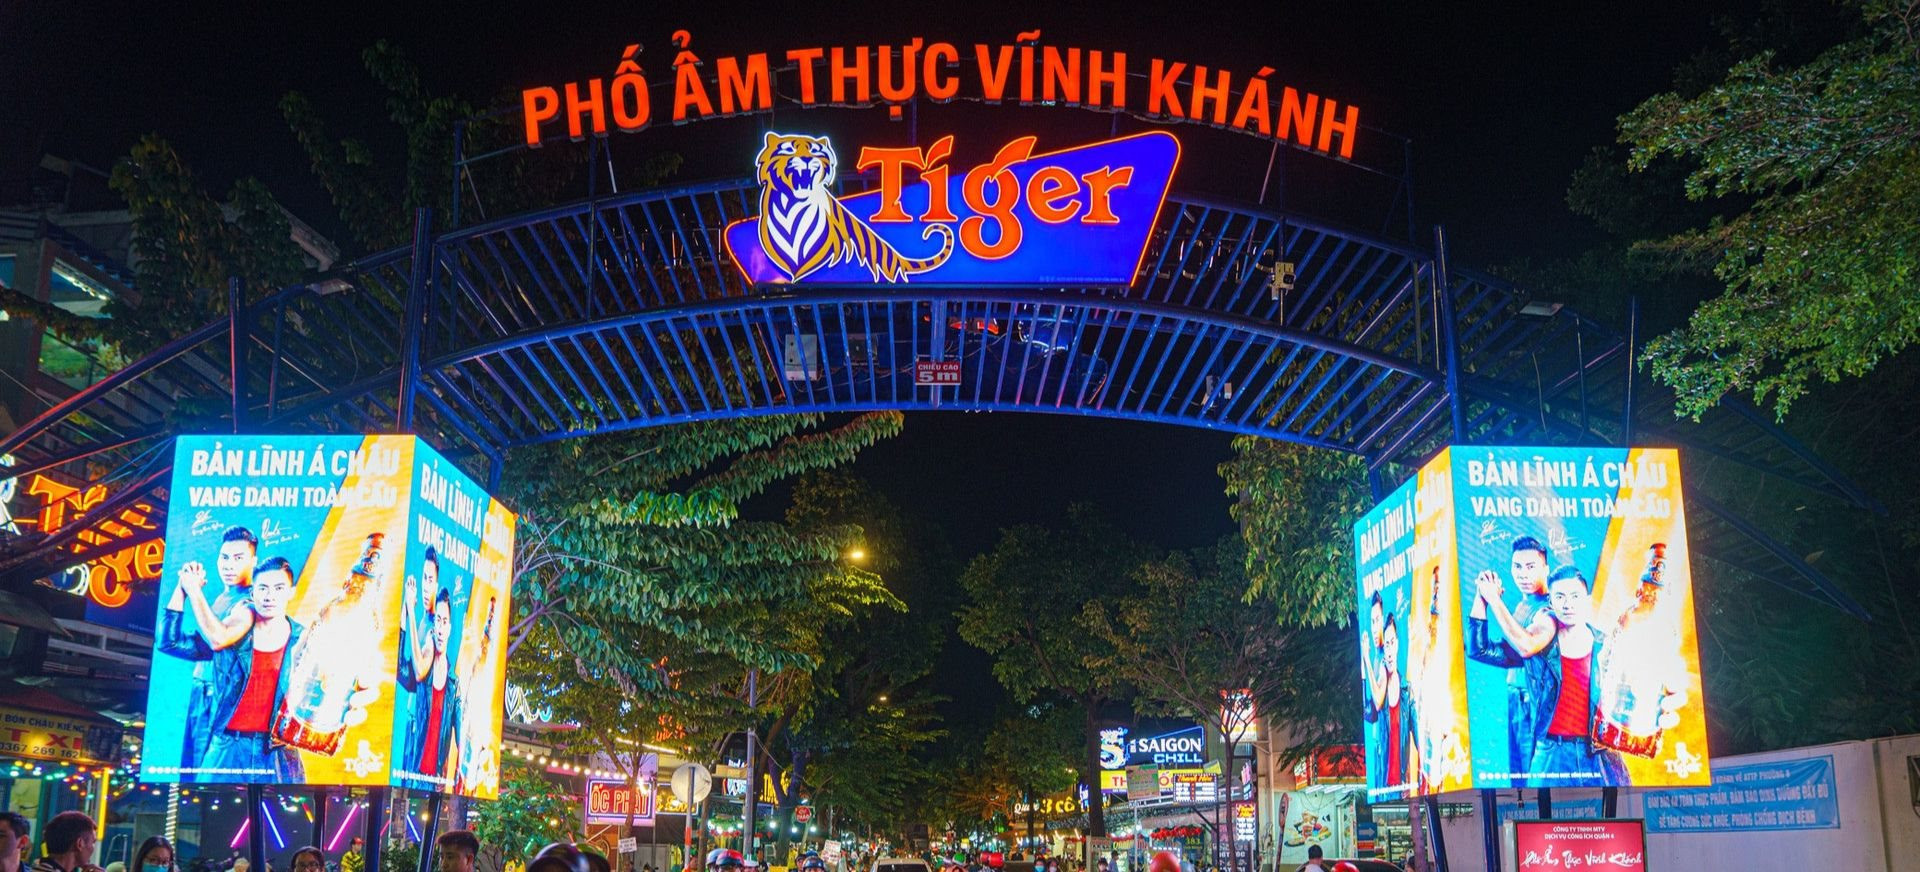 pho-am-thuc-vinh-khanh-banner.jpg